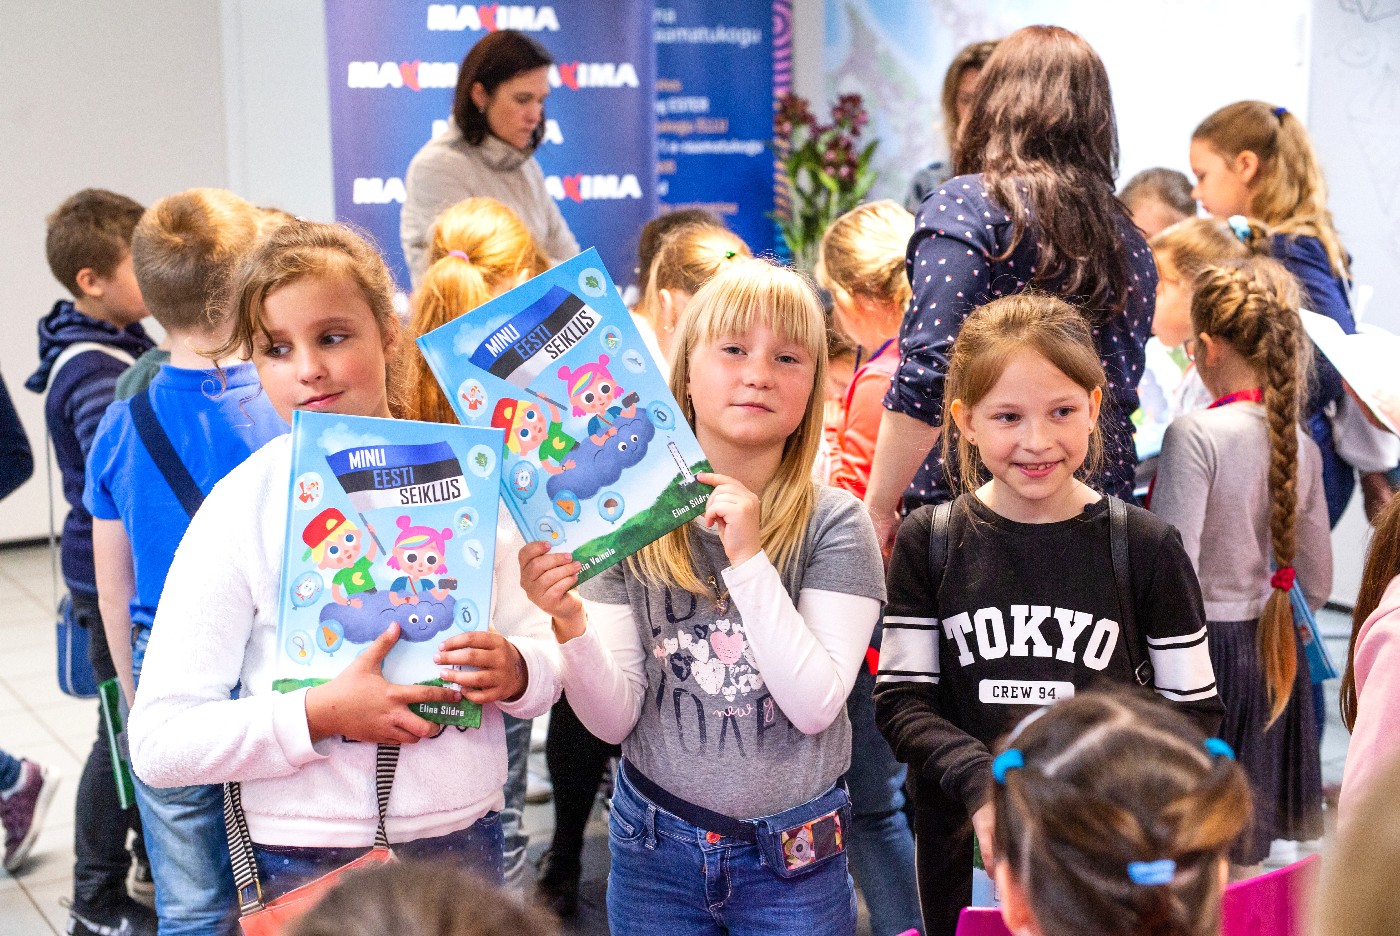 Maxima подарила библиотеке шестьсот детских книг